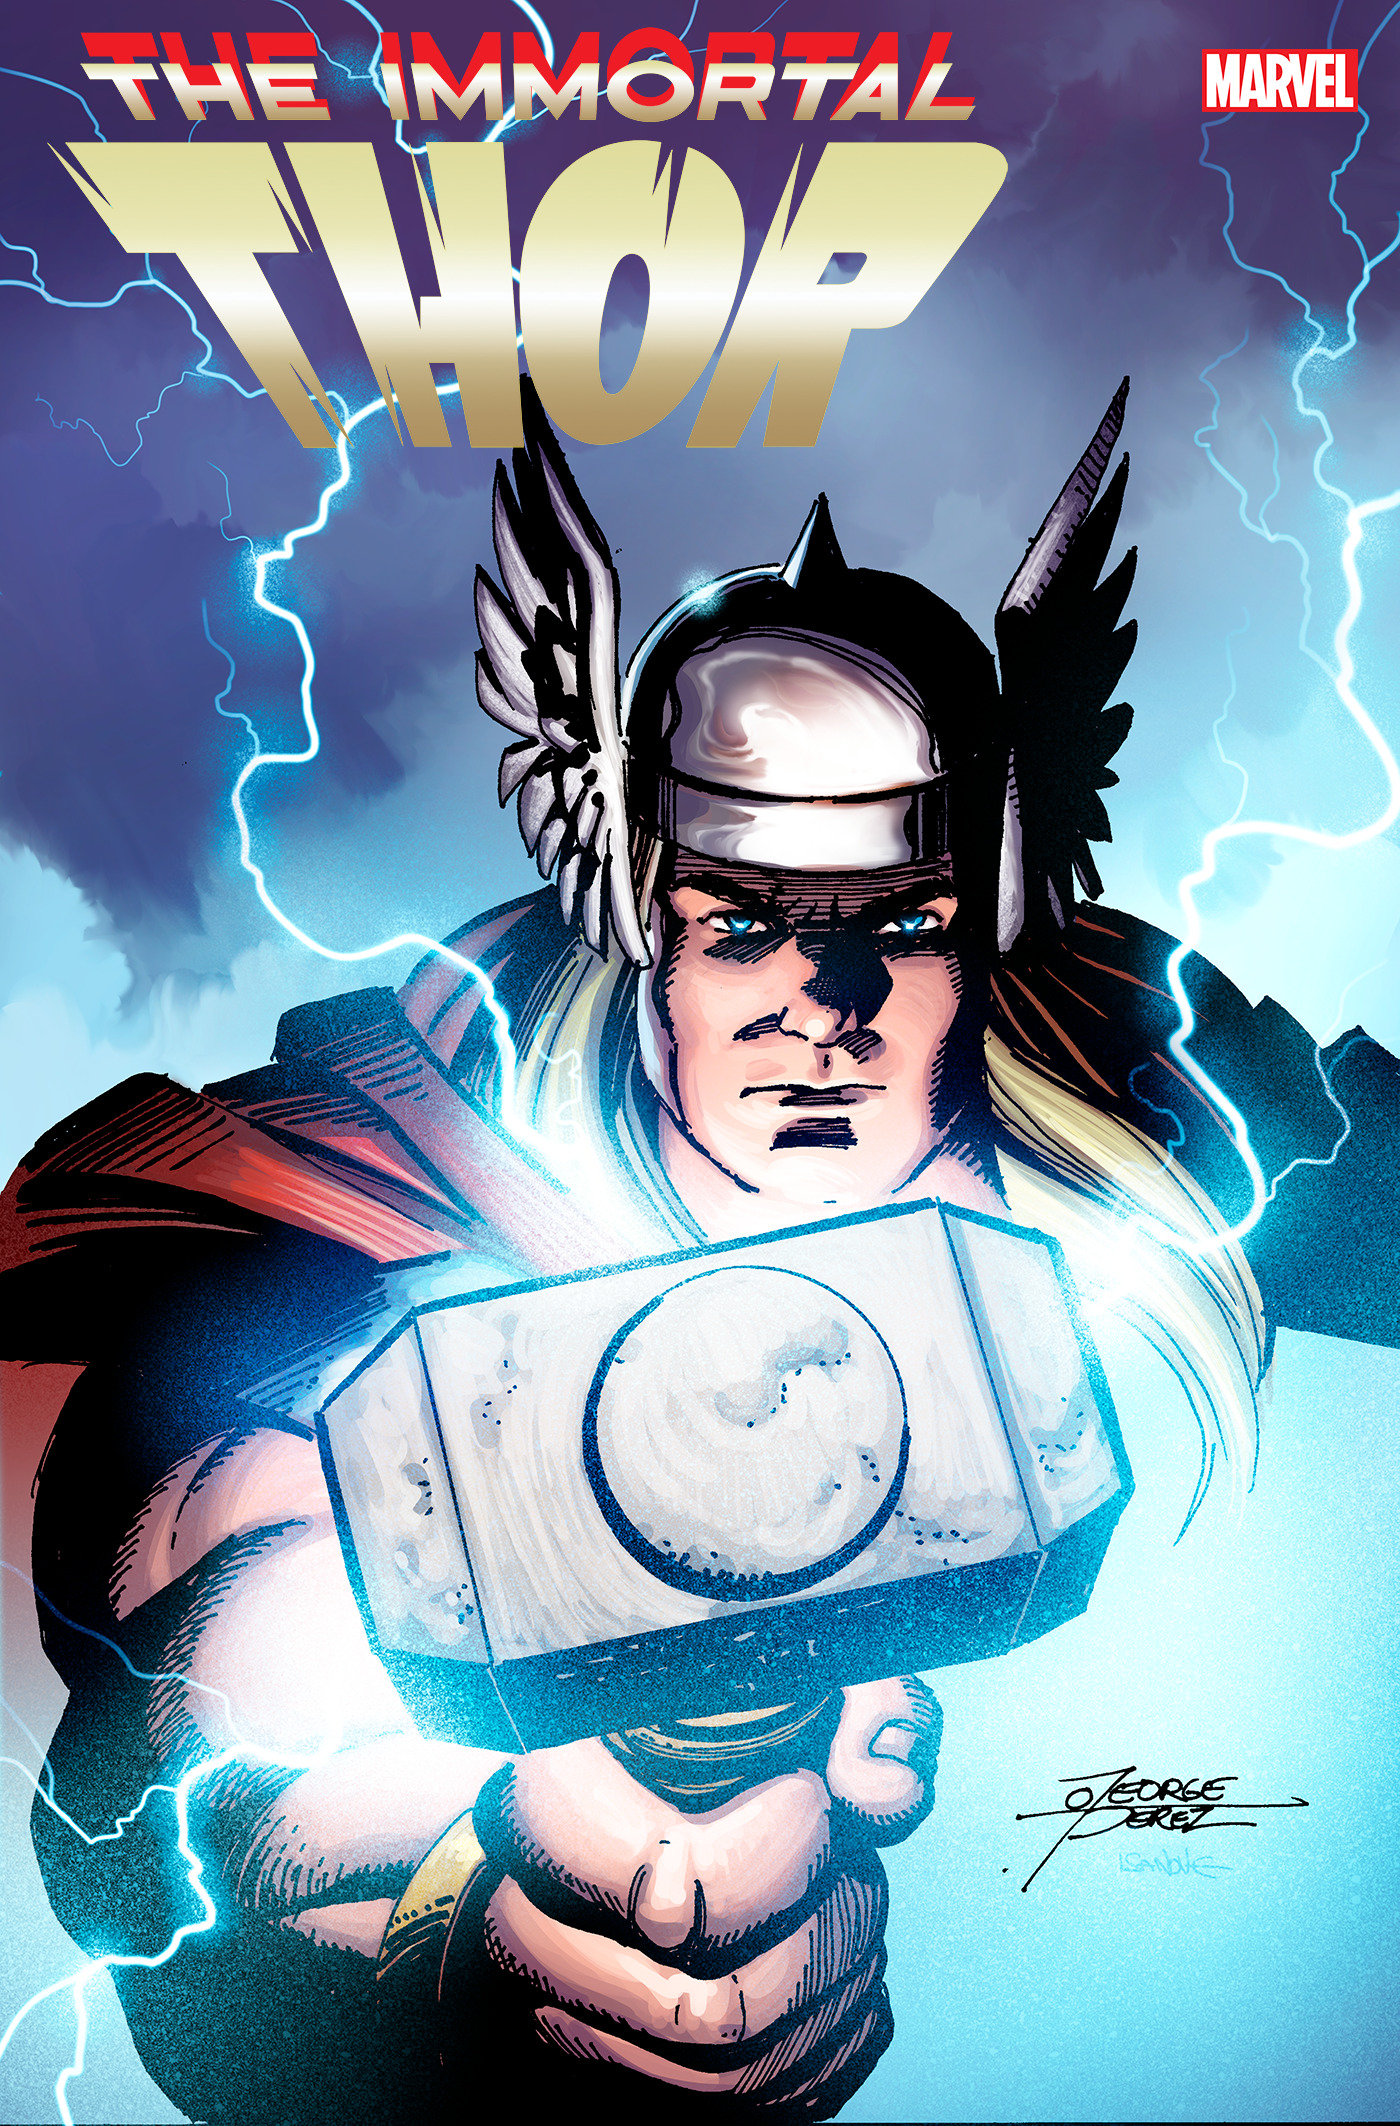 Immortal Thor #1 George Perez Variant [Gods]